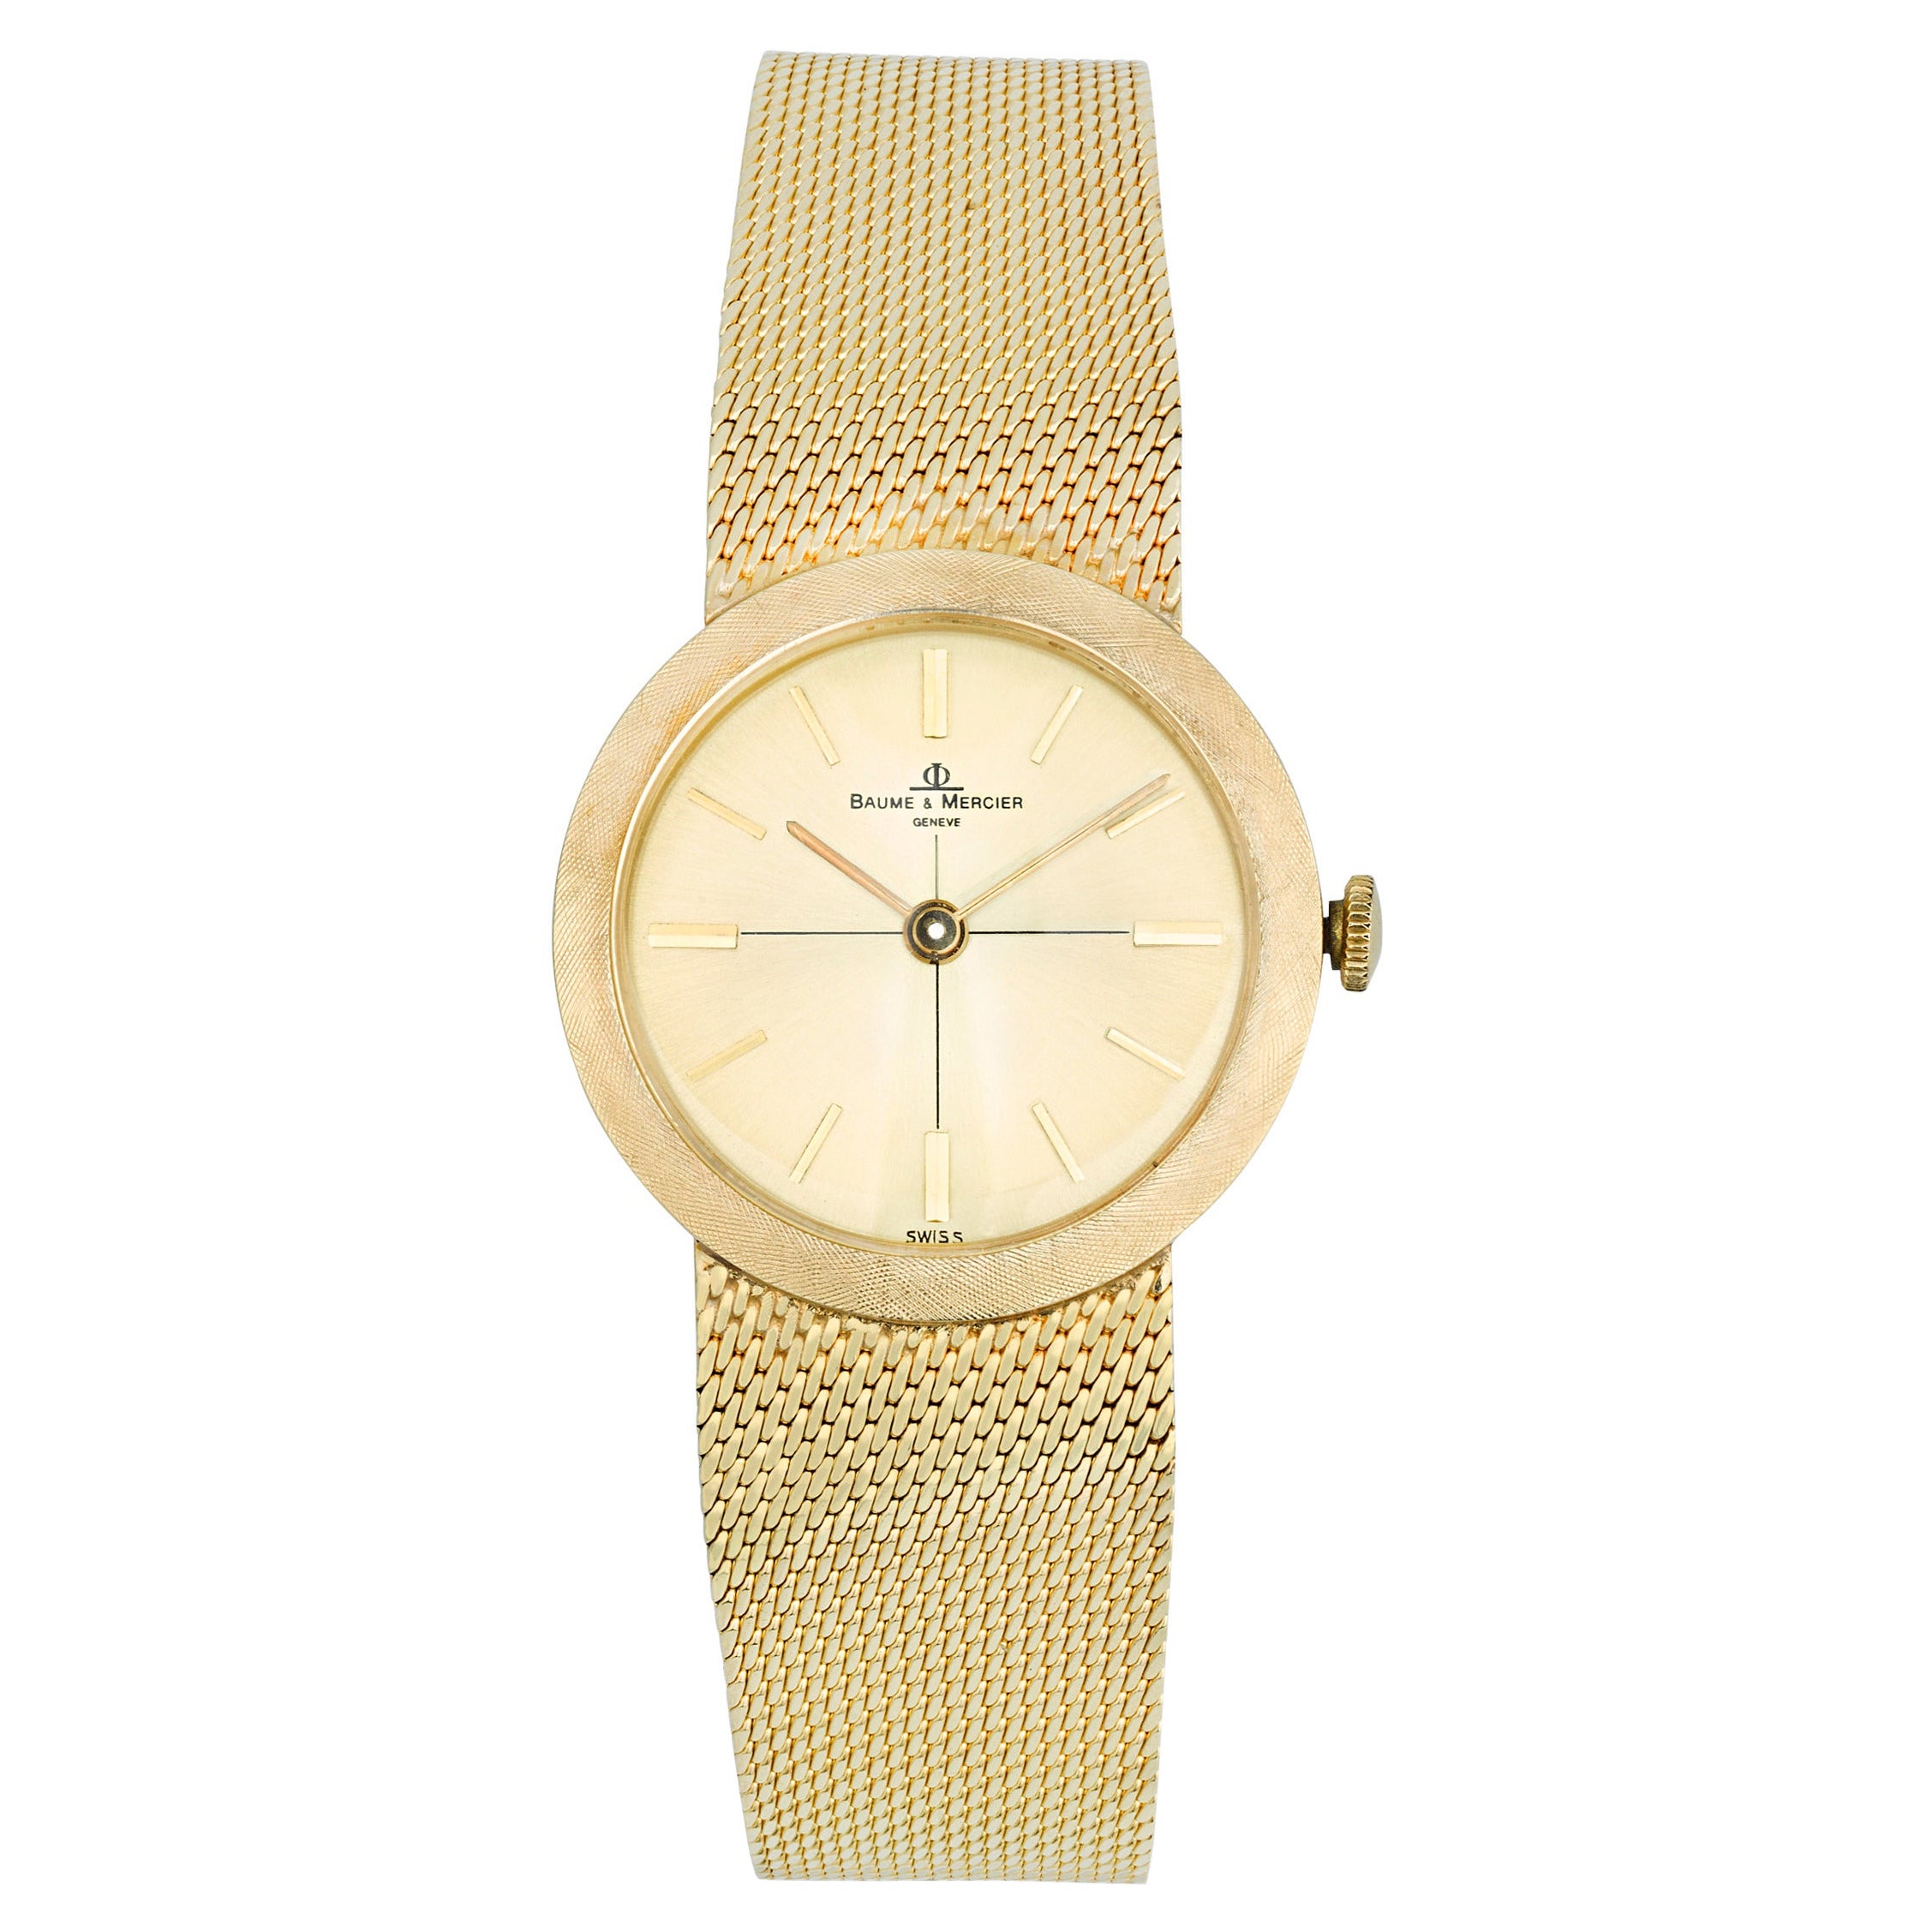 Elvis Presley's 14K Gold Watch